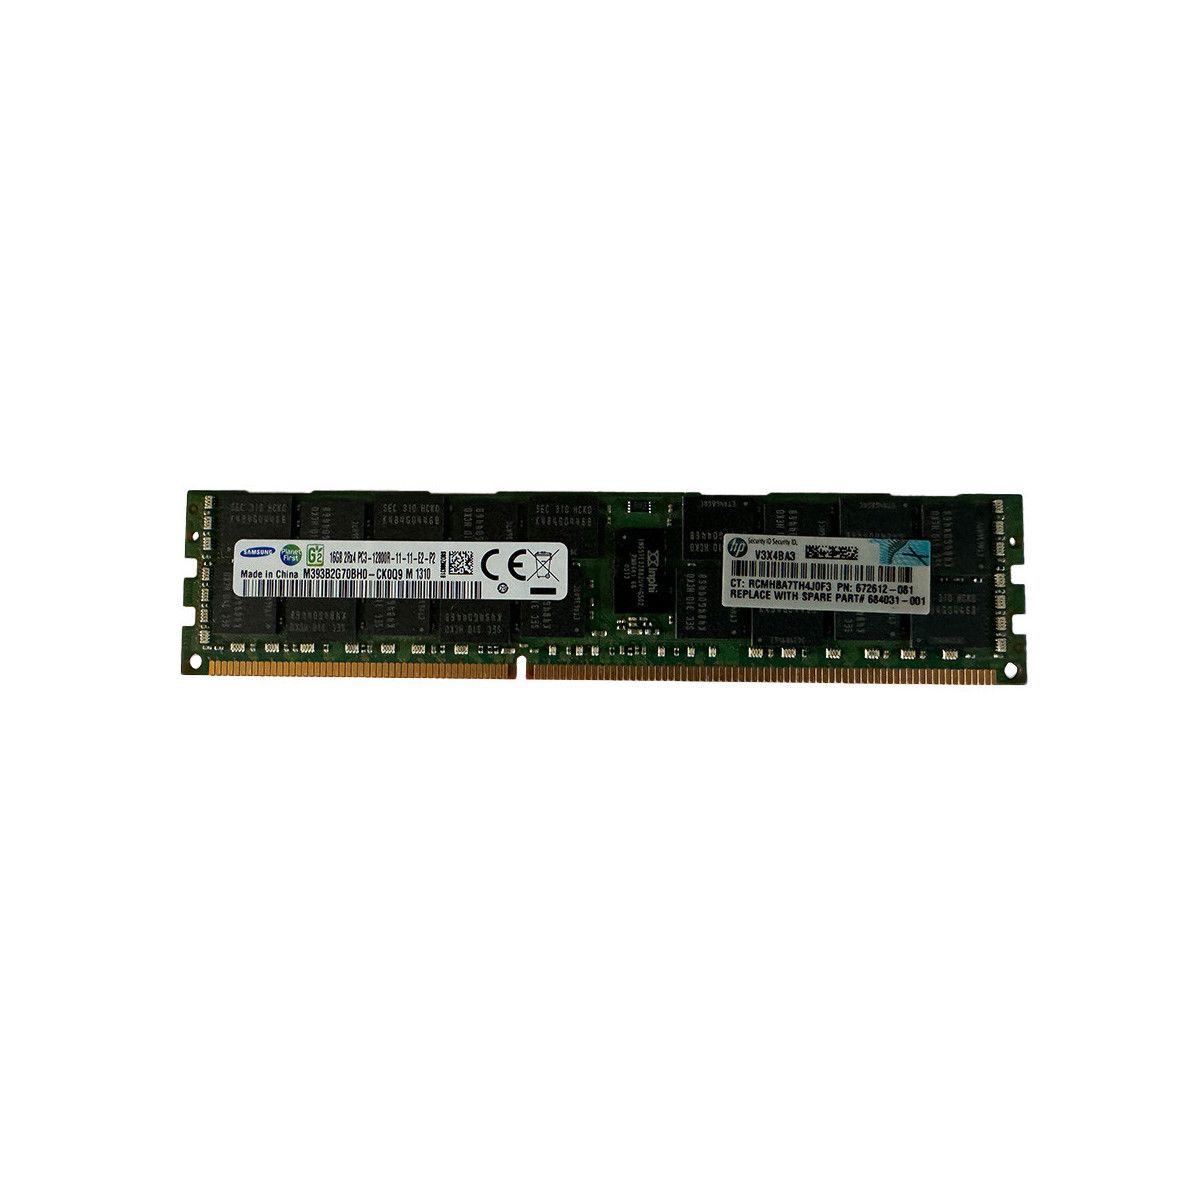 672631-B21-MS -NO- Memstar 1x 16GB DDR3-1600 RDIMM PC3-12800R - Mem-Star OEM compatibile Memoria 1 - Memstar 